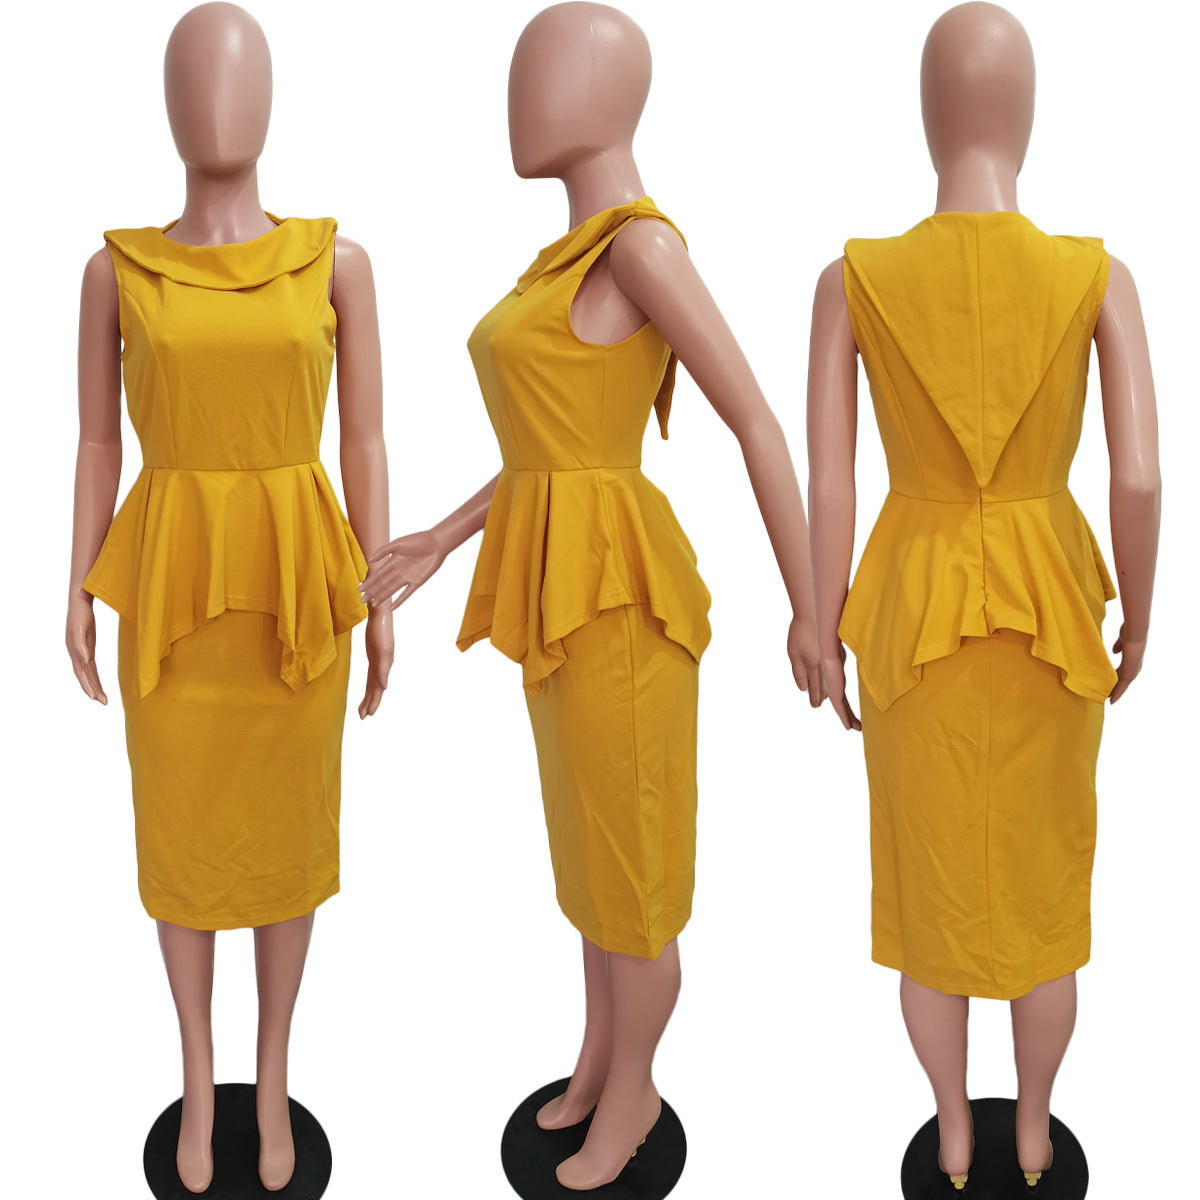 BamBam Women's Solid Color Double Collar Sleeveless Ruffle Dress - BamBam